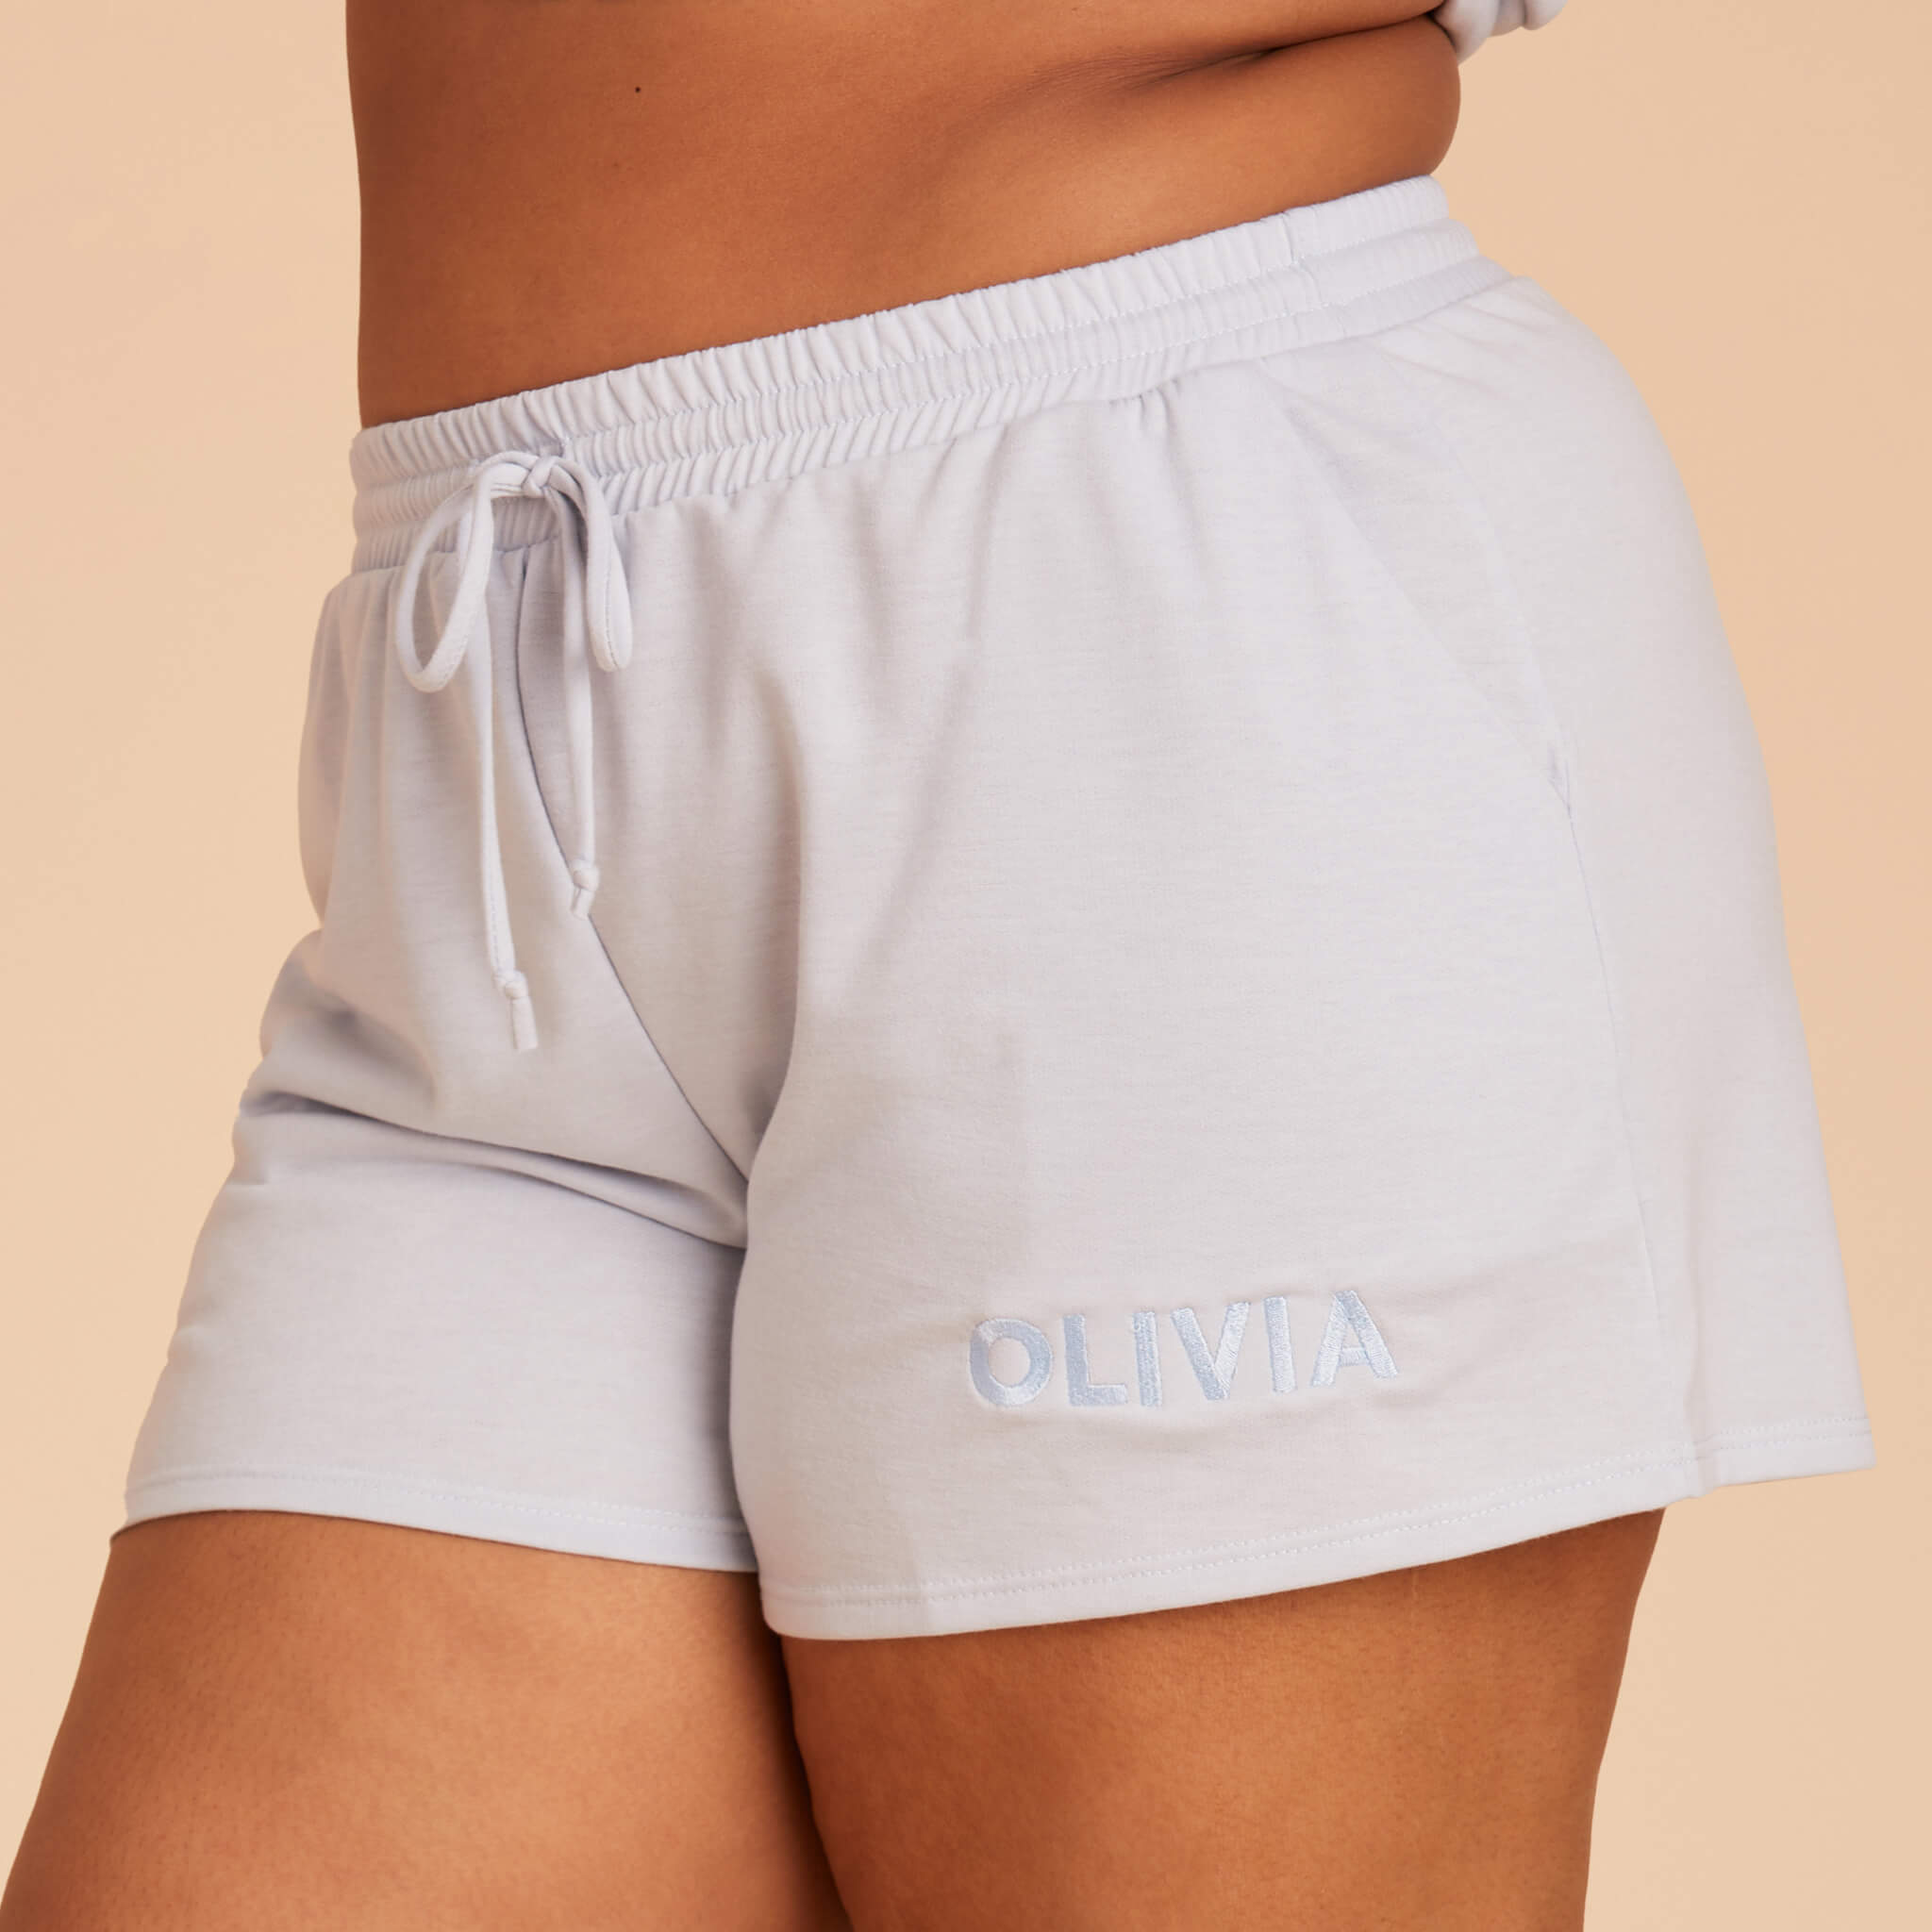 Plus Size Light Blue Sweat shorts with personalization